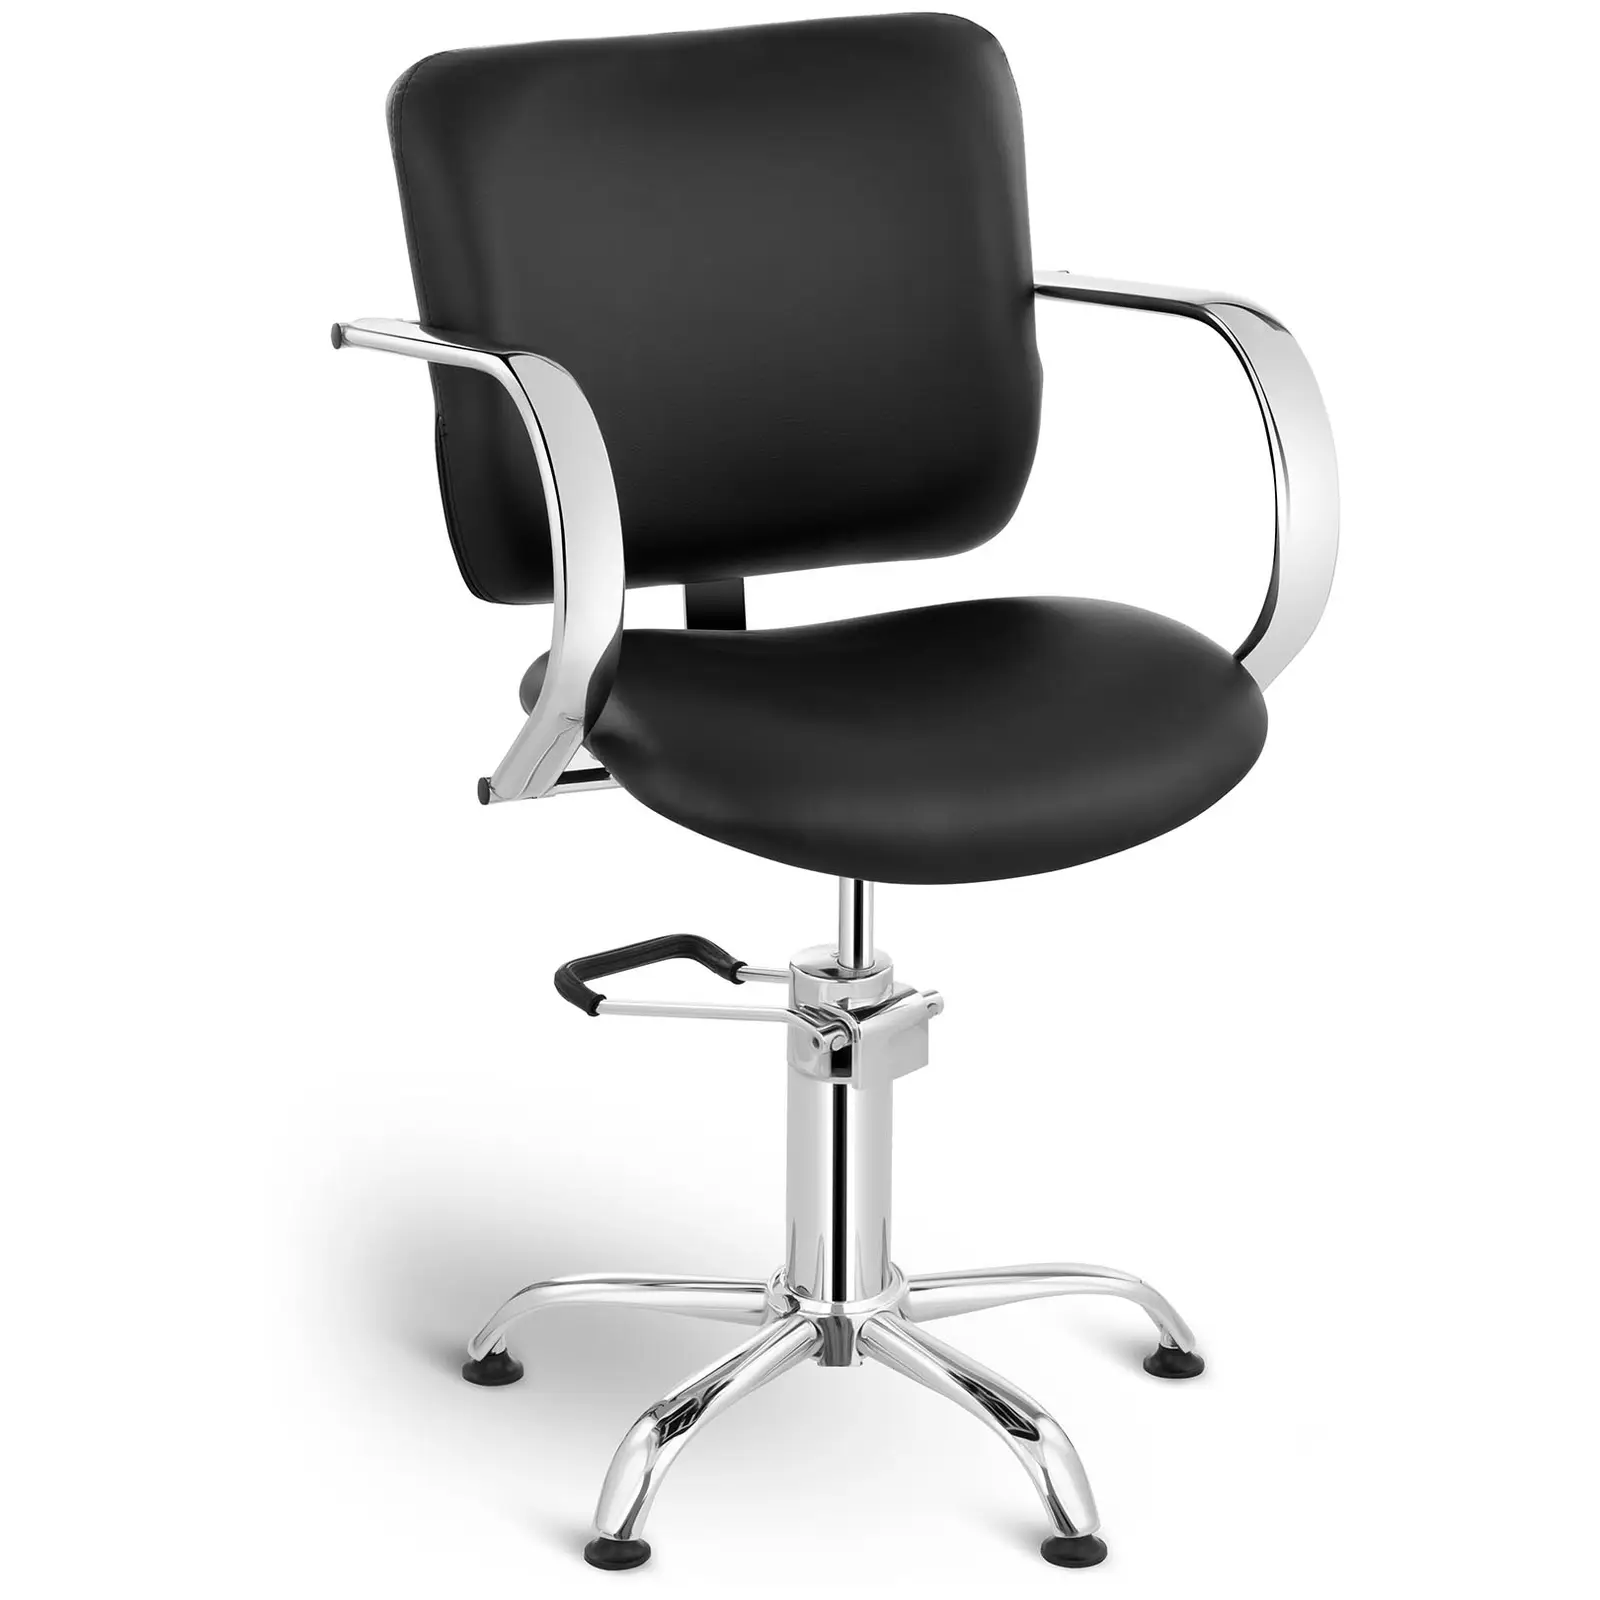 Salon Chair - 590-720 mm - Black